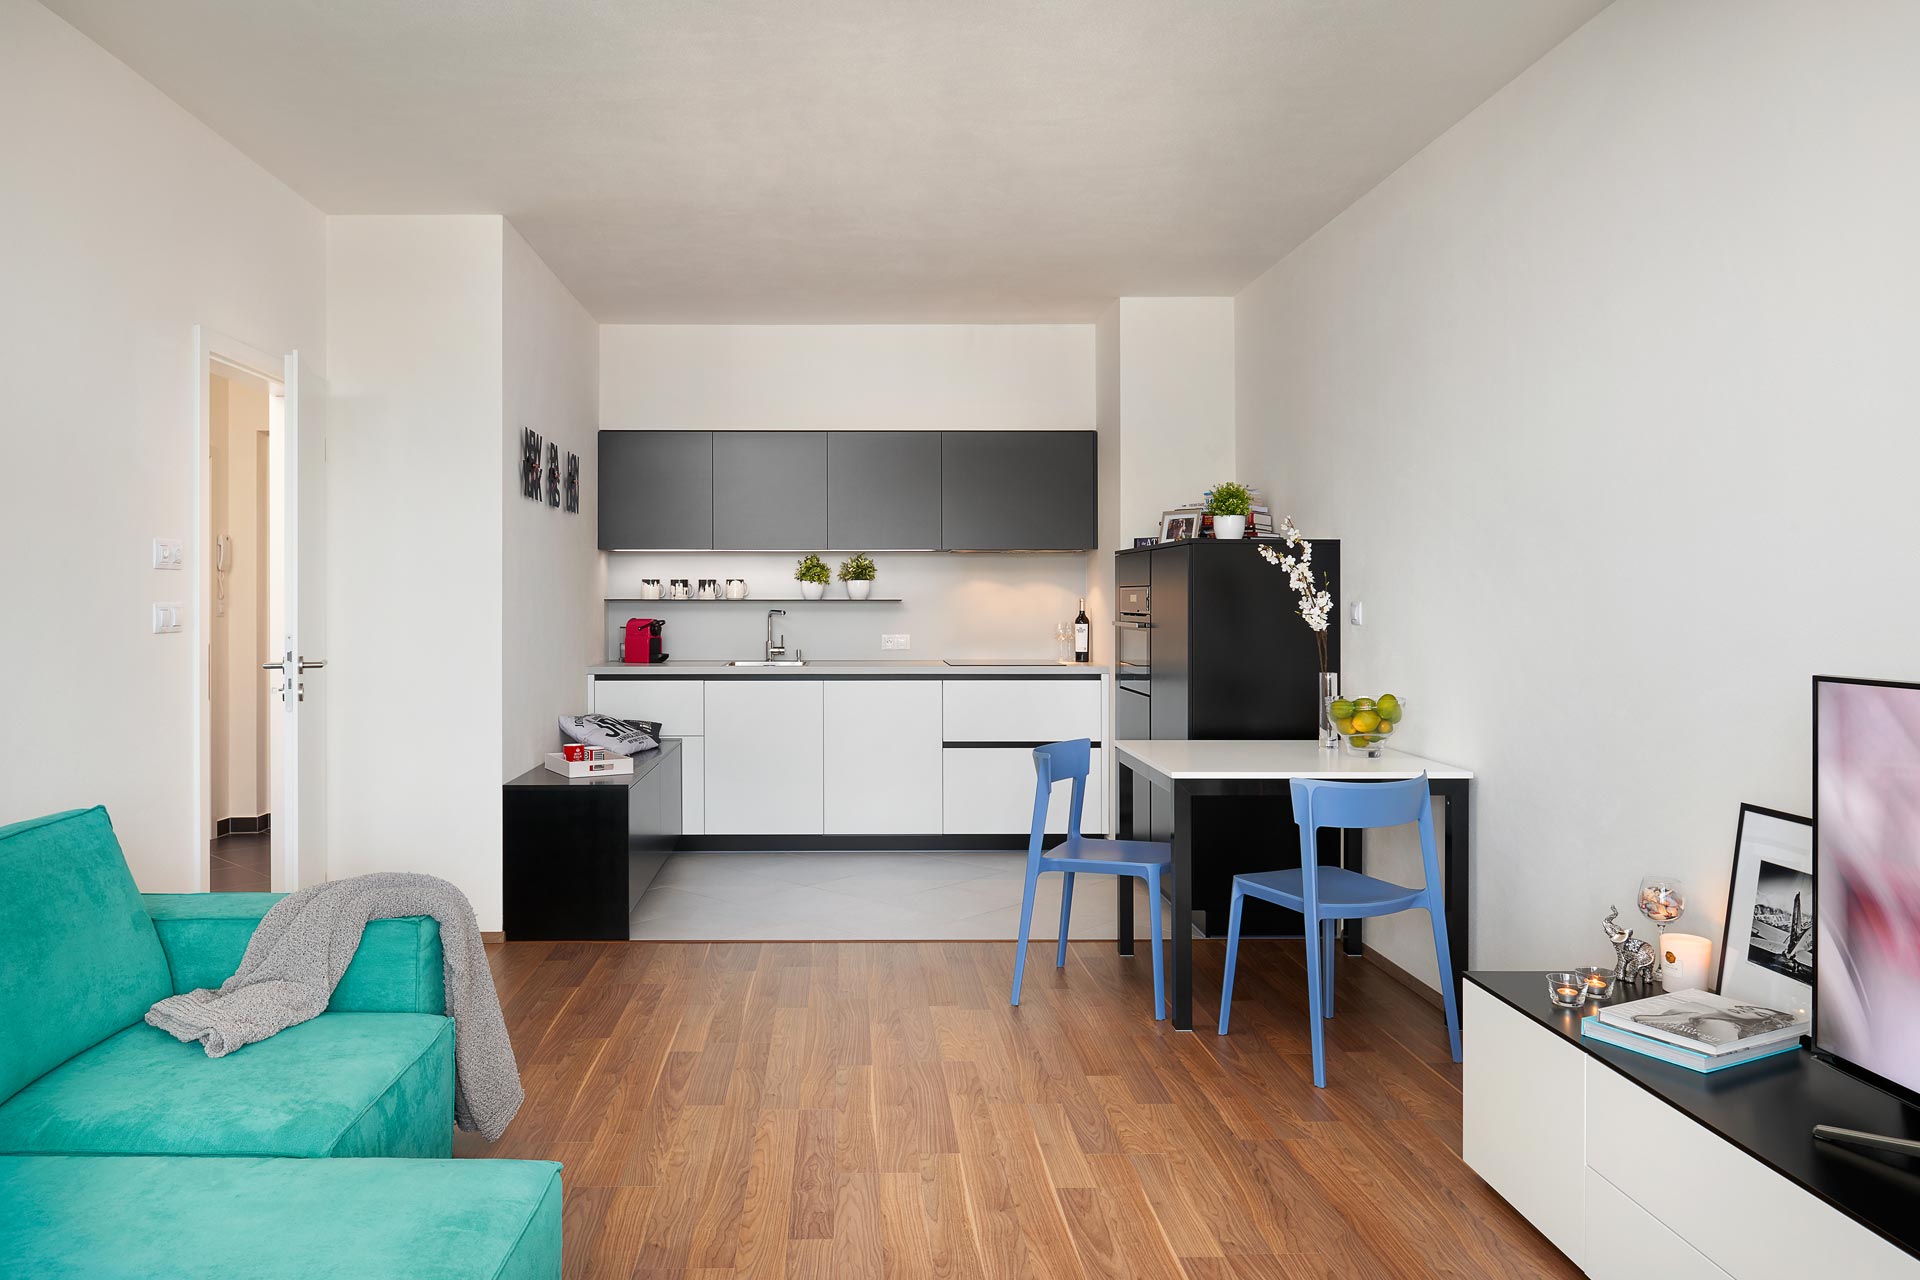 Hanák Furniture Small Apartment Interior